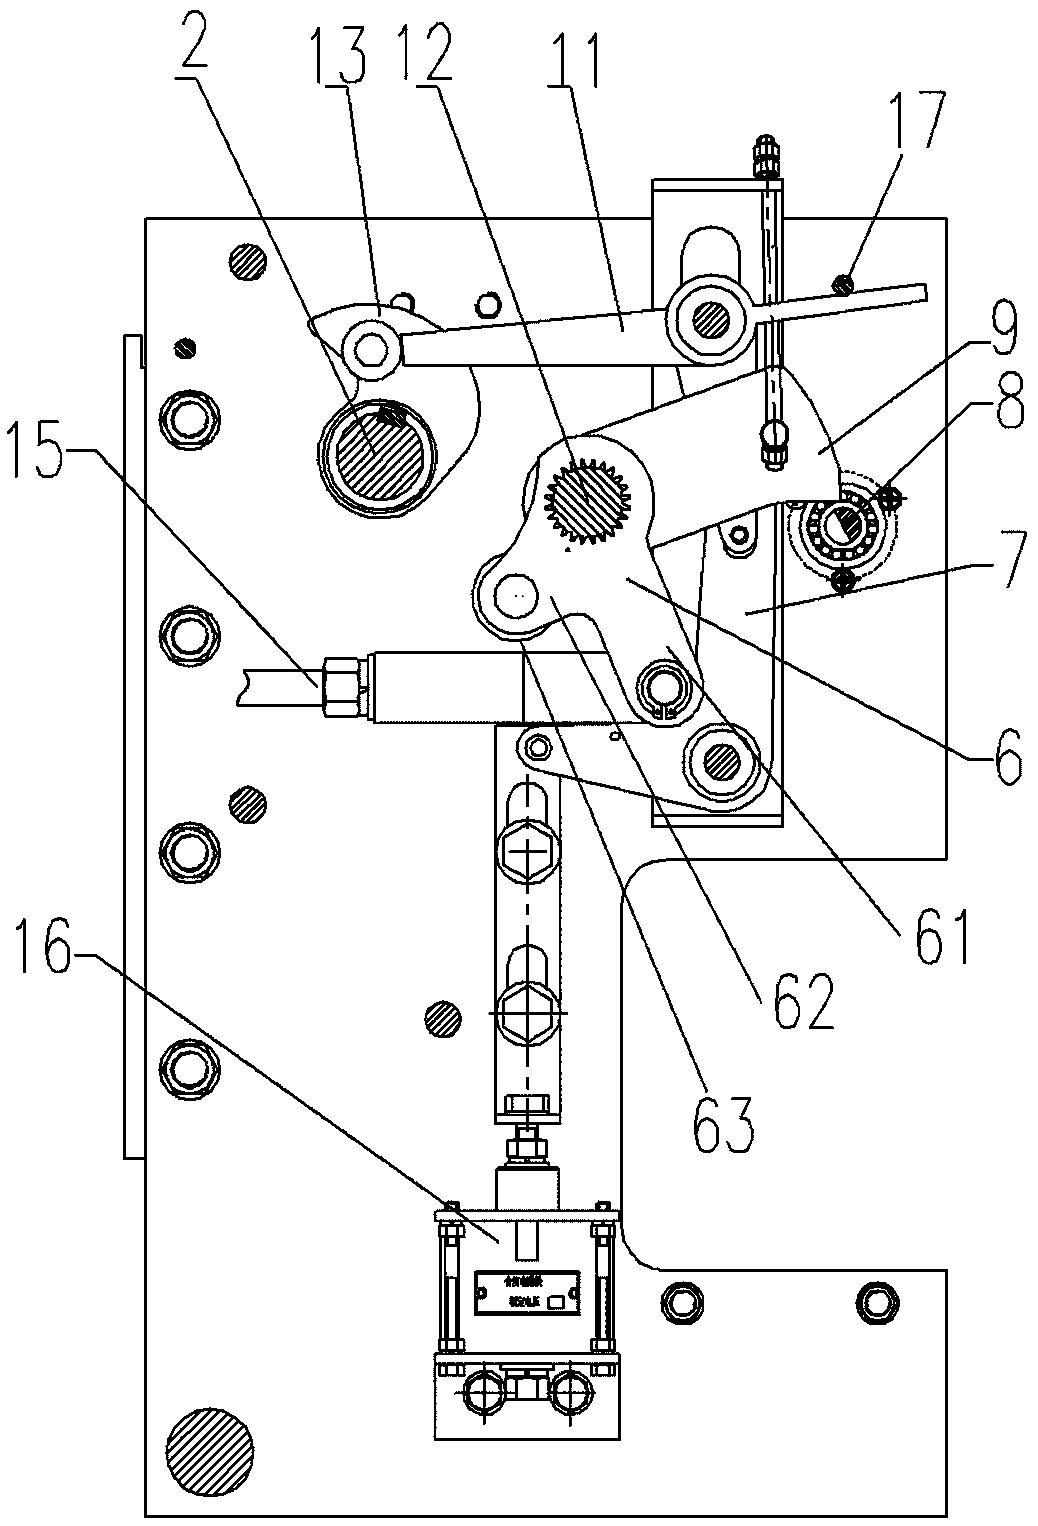 A circuit breaker spring operating mechanism